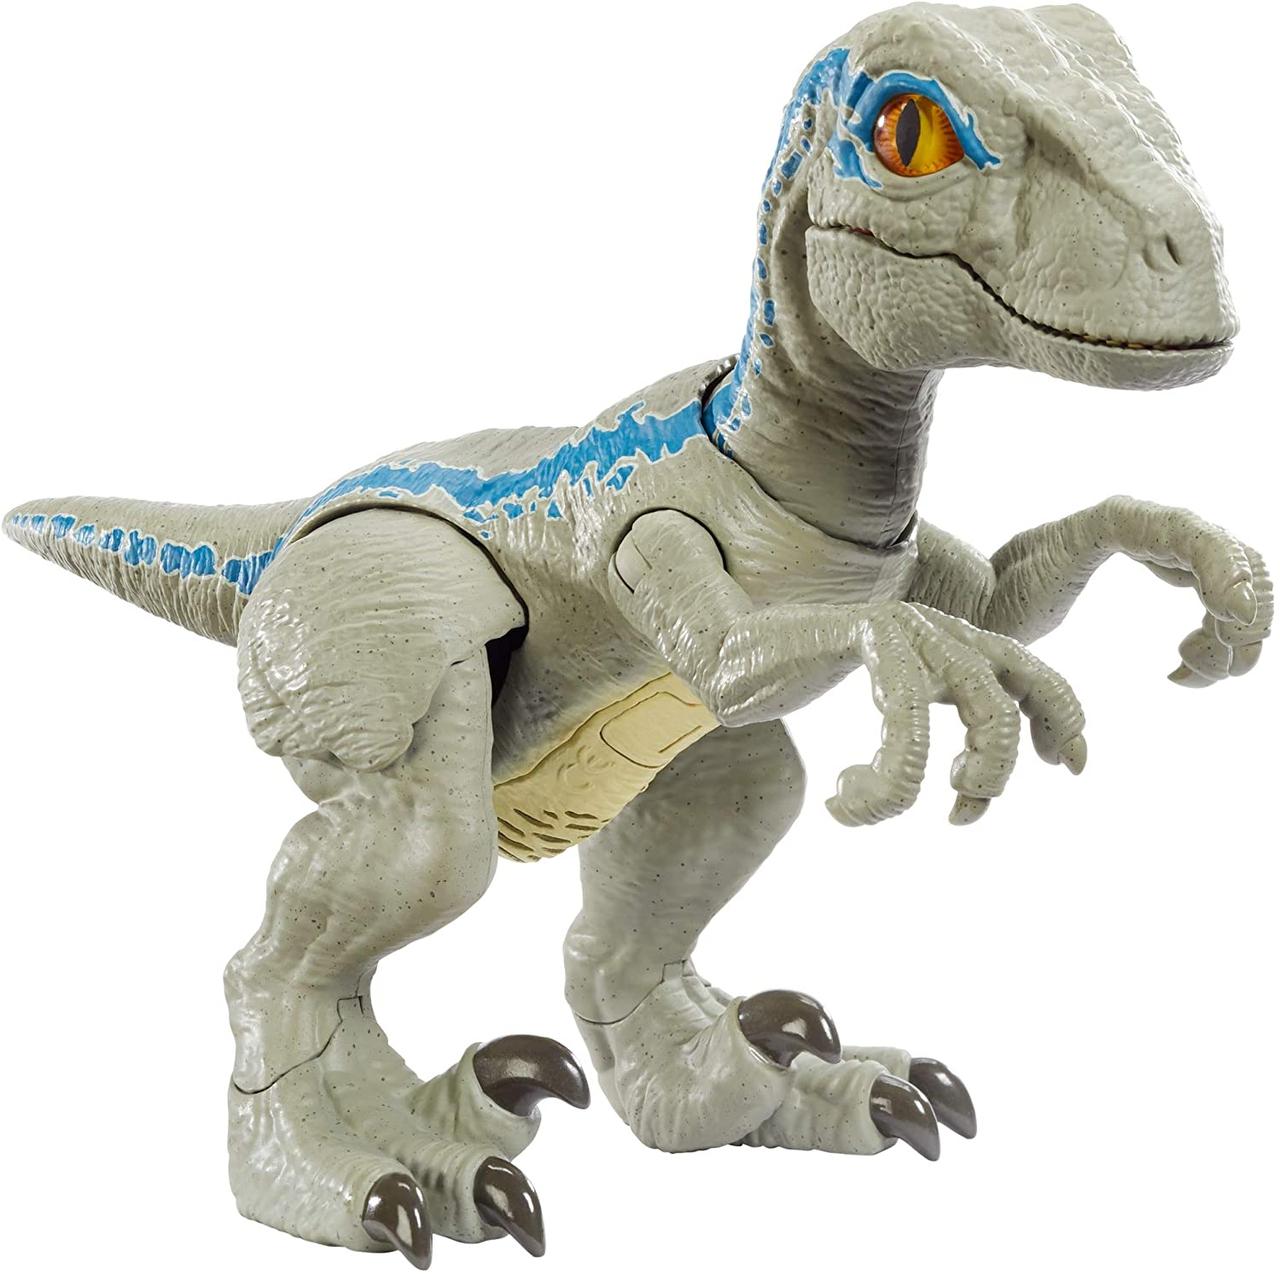 Іграшка динозавр Jurassic World Dino Rivals велоцираптор Блю GFD40, фото 1